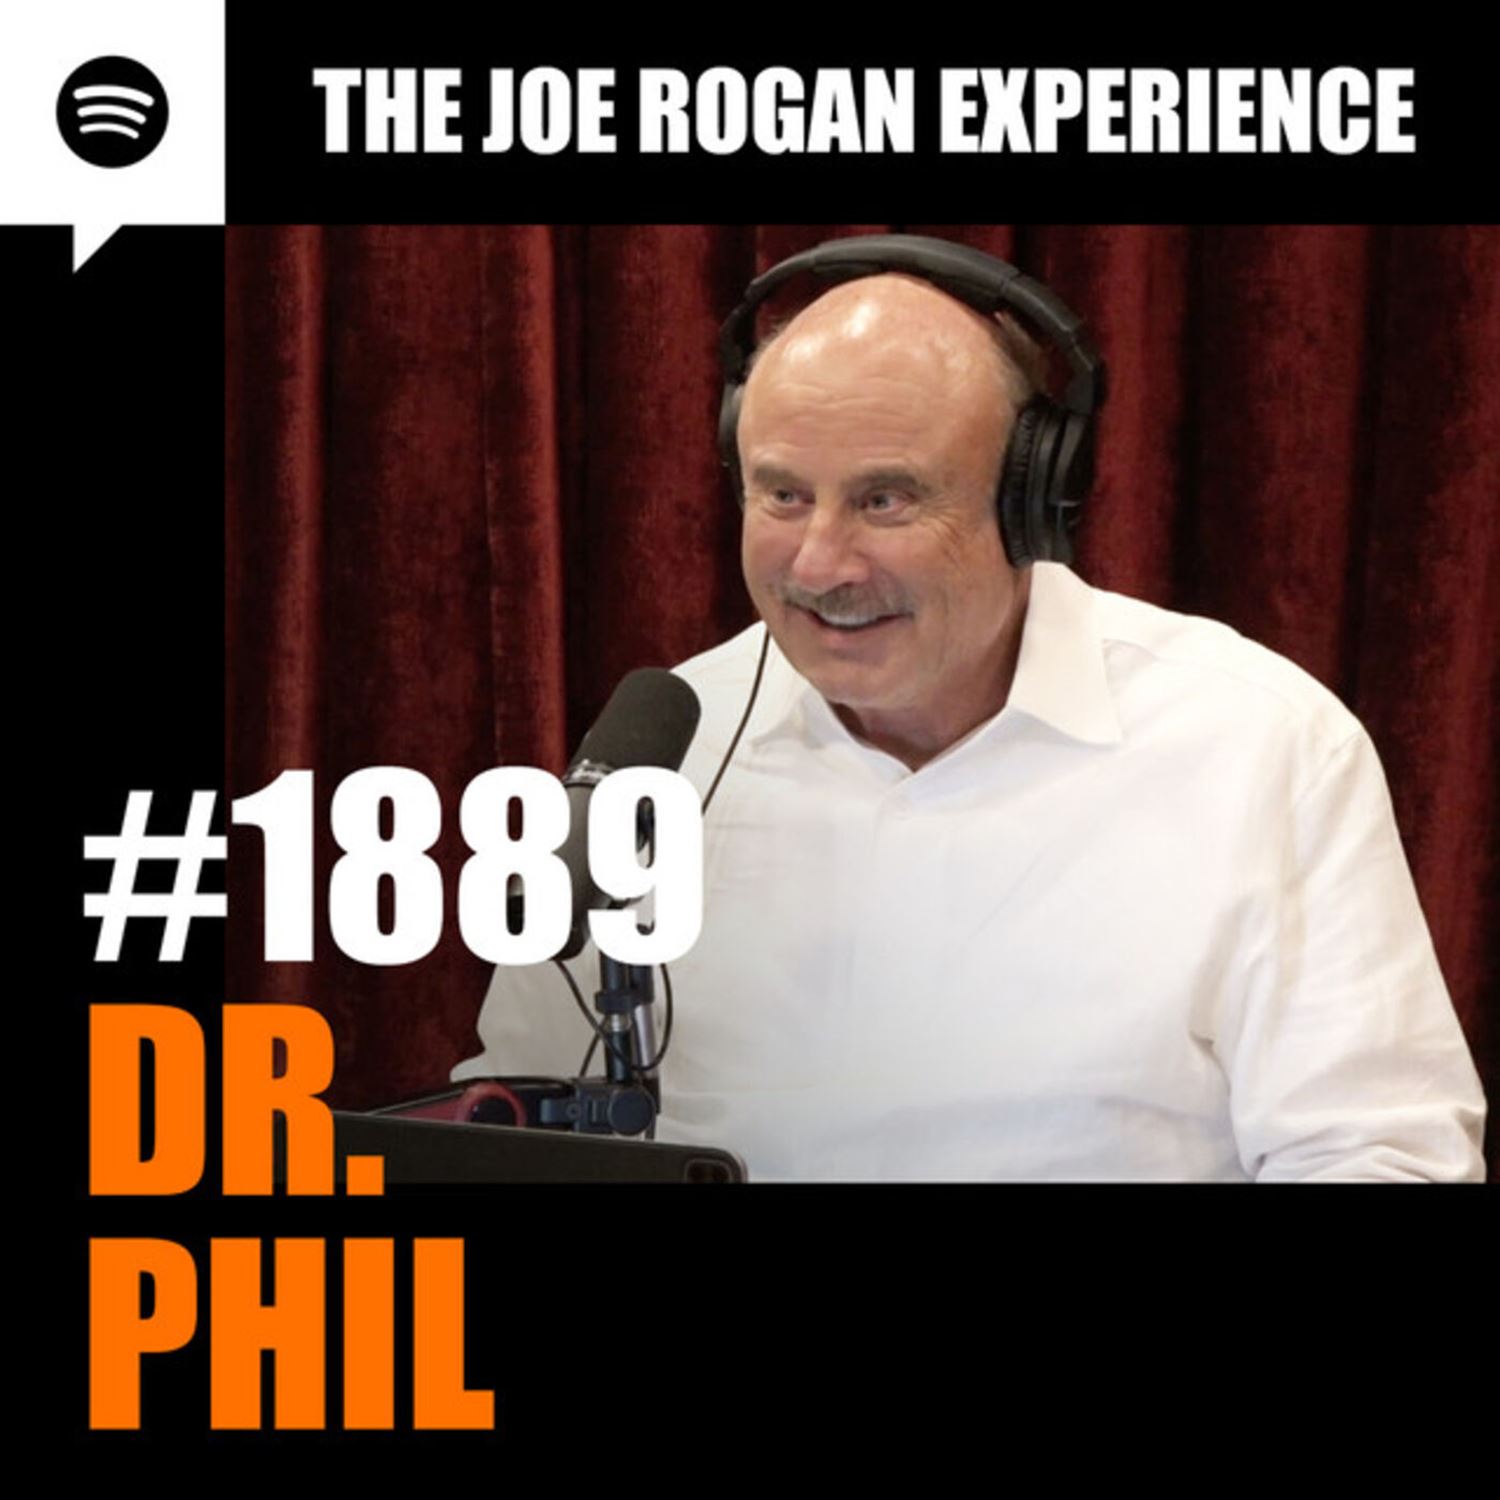 Joe Rogan and Dr. Phil